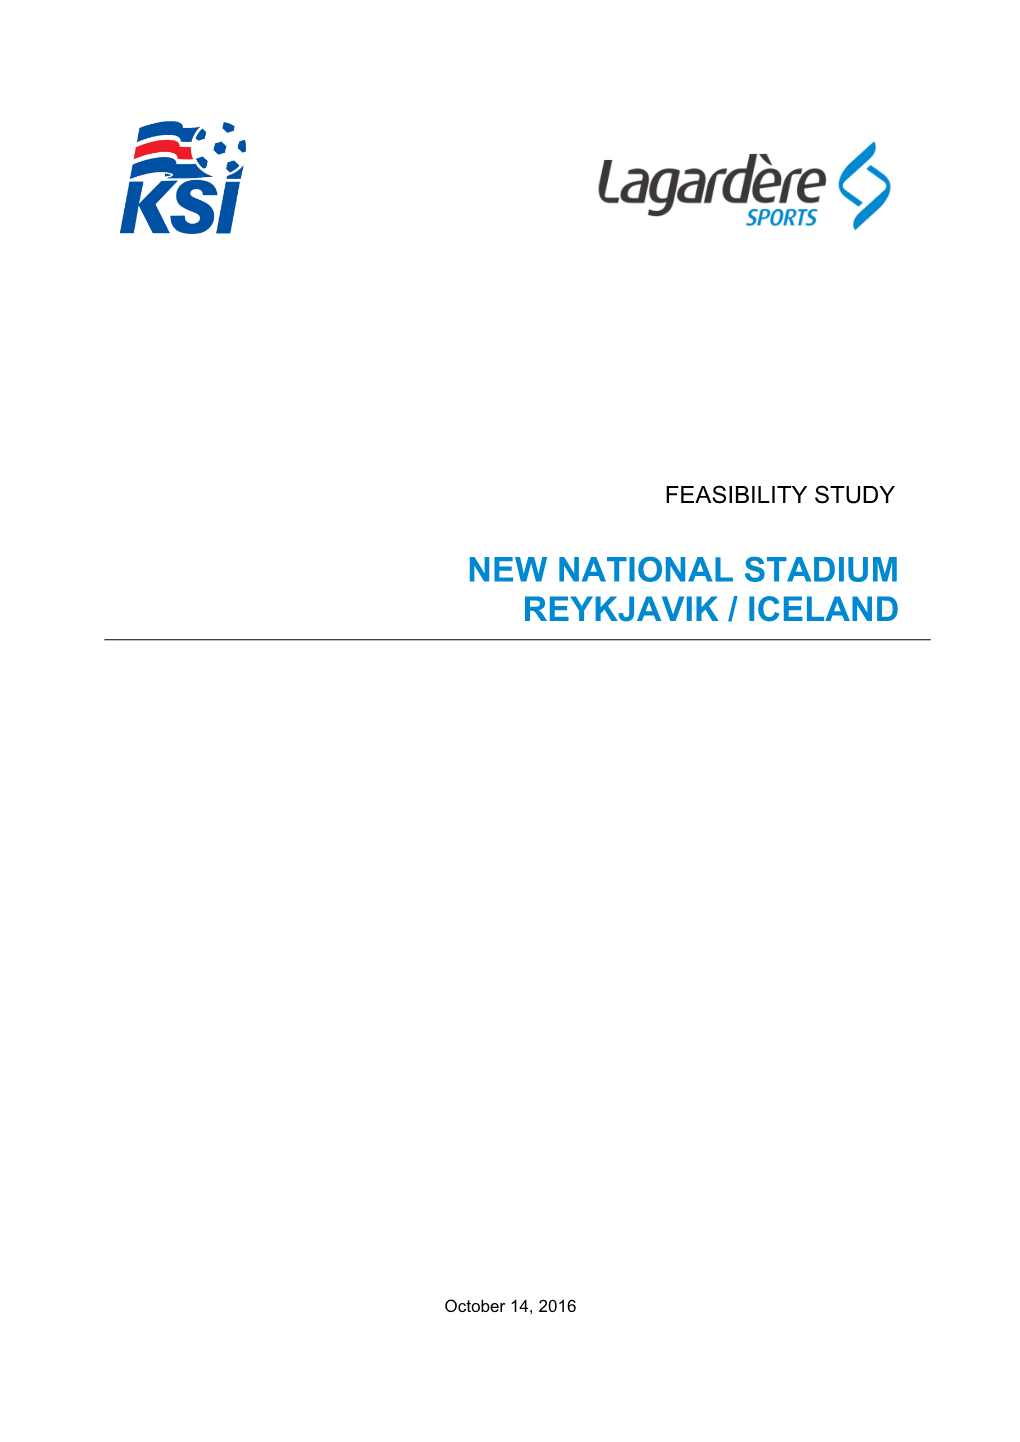 New National Stadium Reykjavik / Iceland